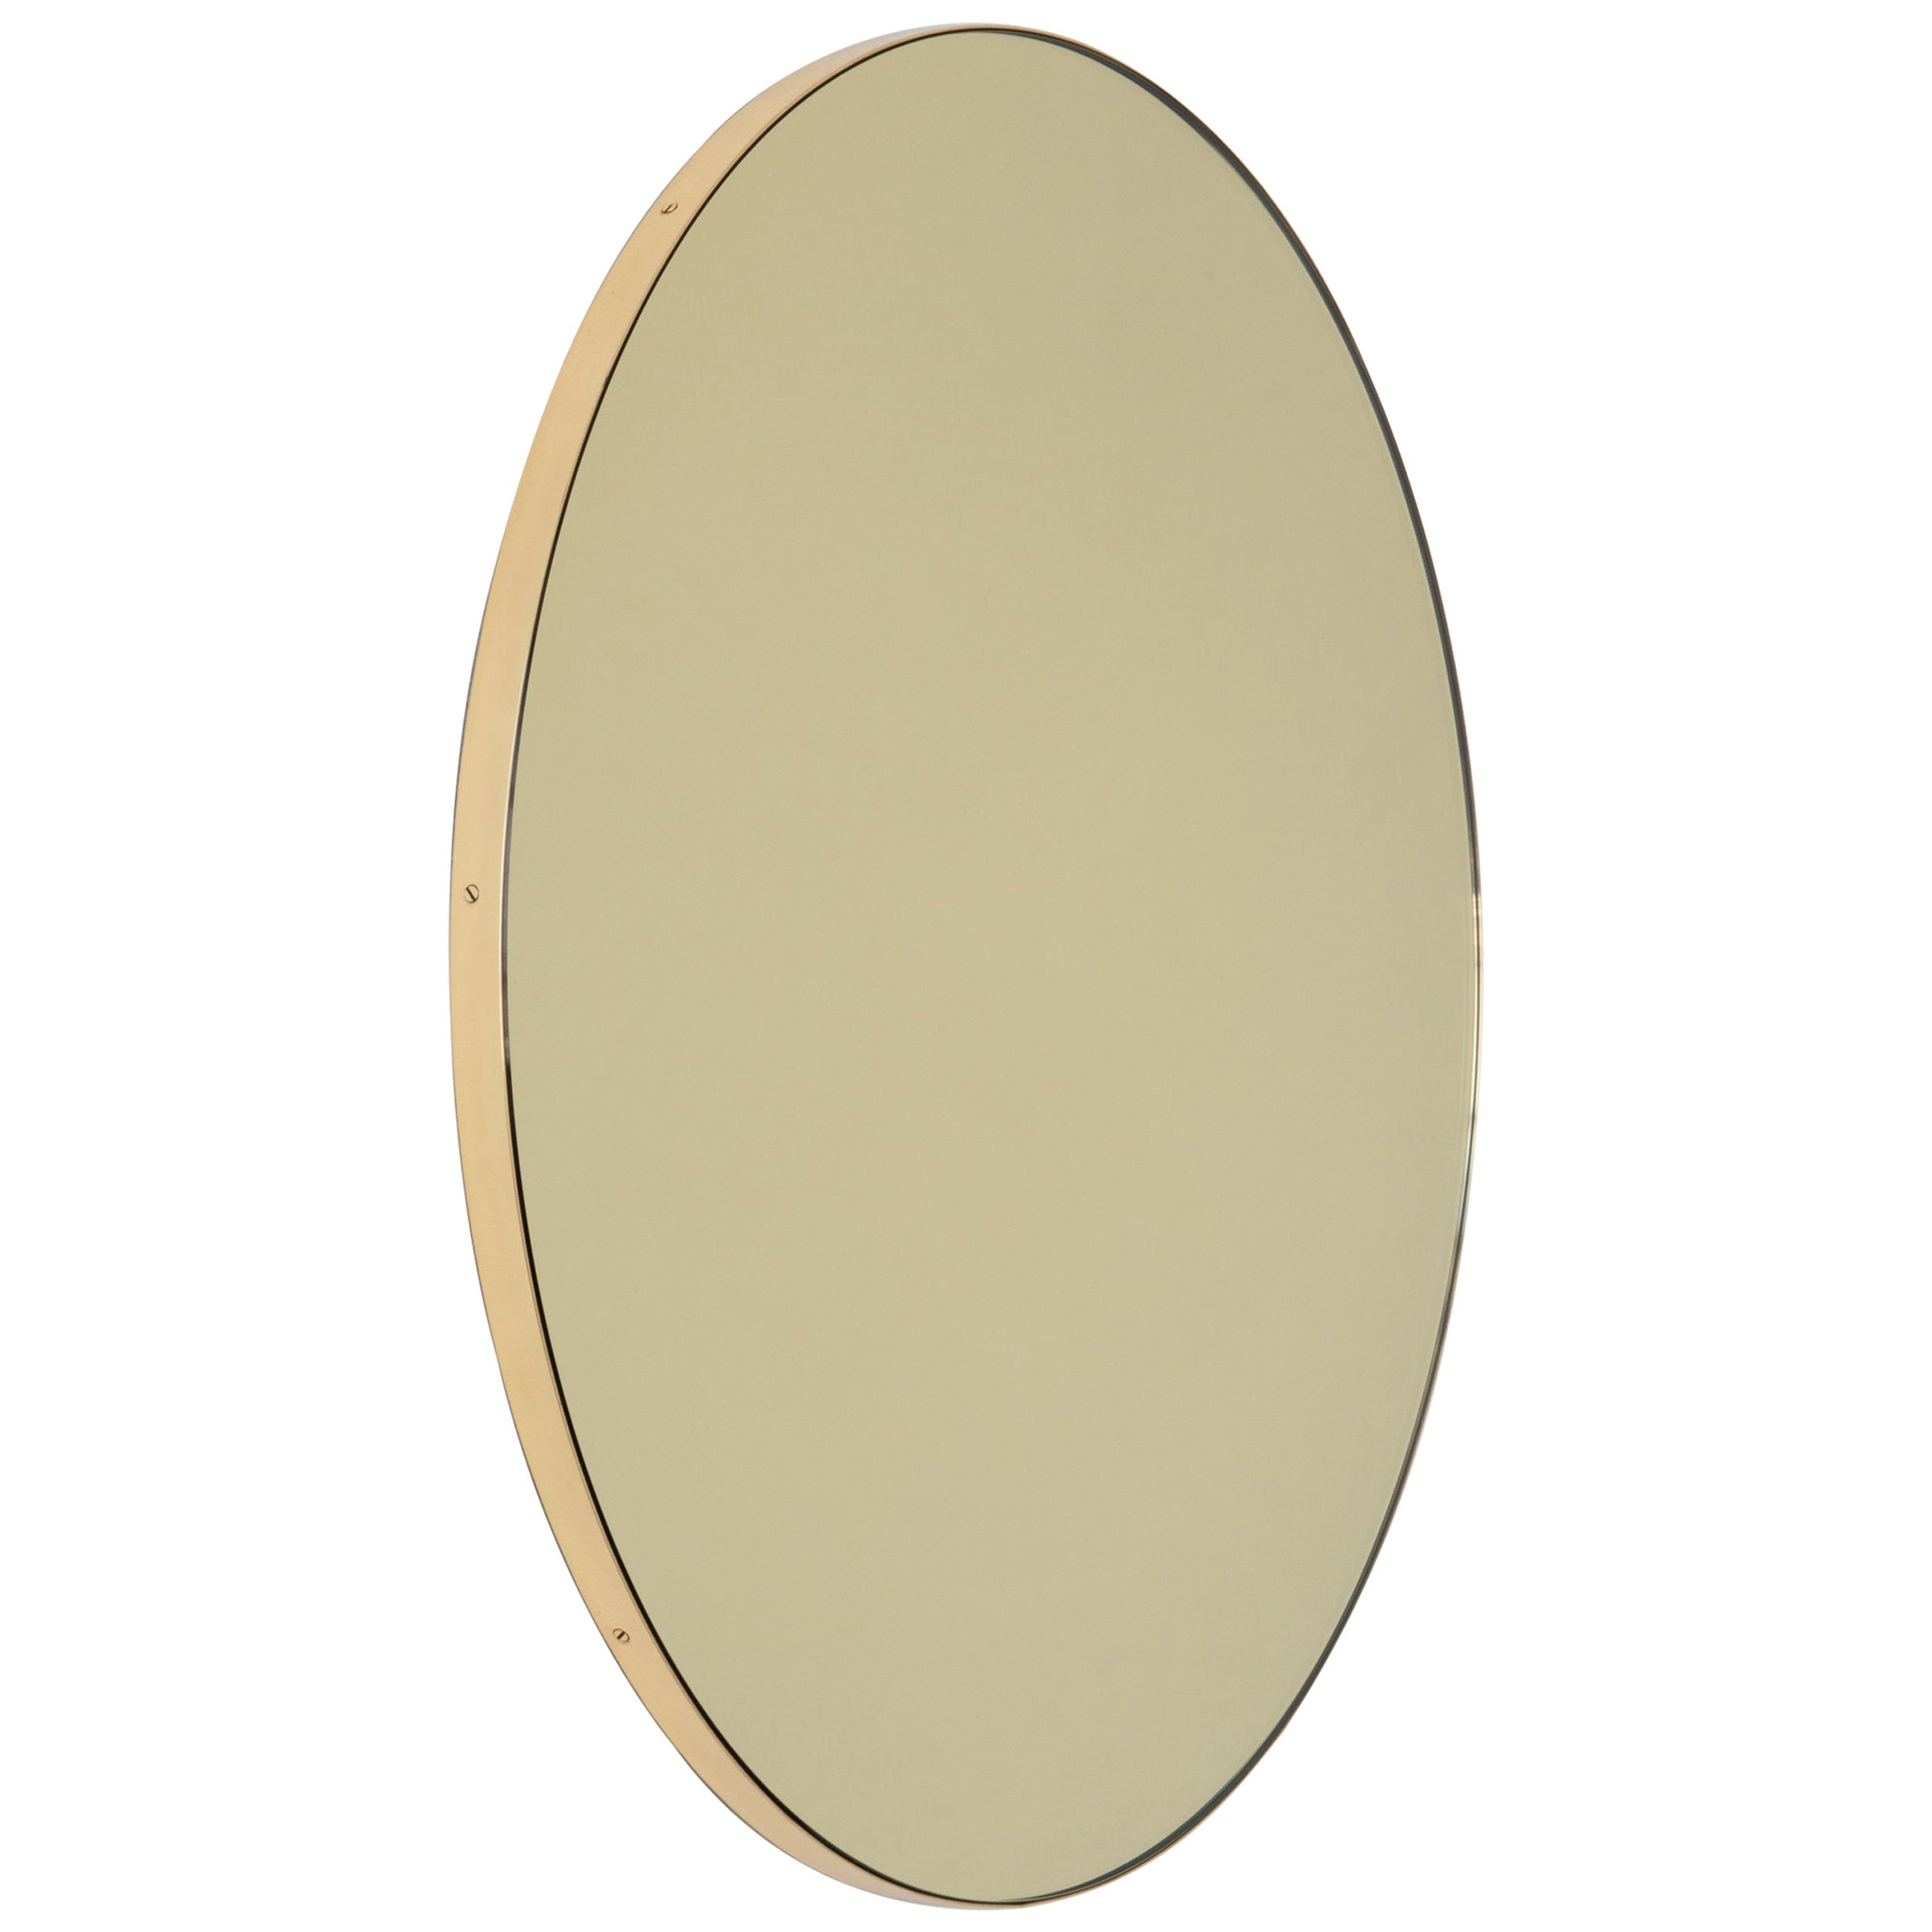 Orbis Gold Tinted Round Modern Mirror with Brushed Brass Frame, Large (miroir rond teinté d'or avec cadre en laiton brossé)